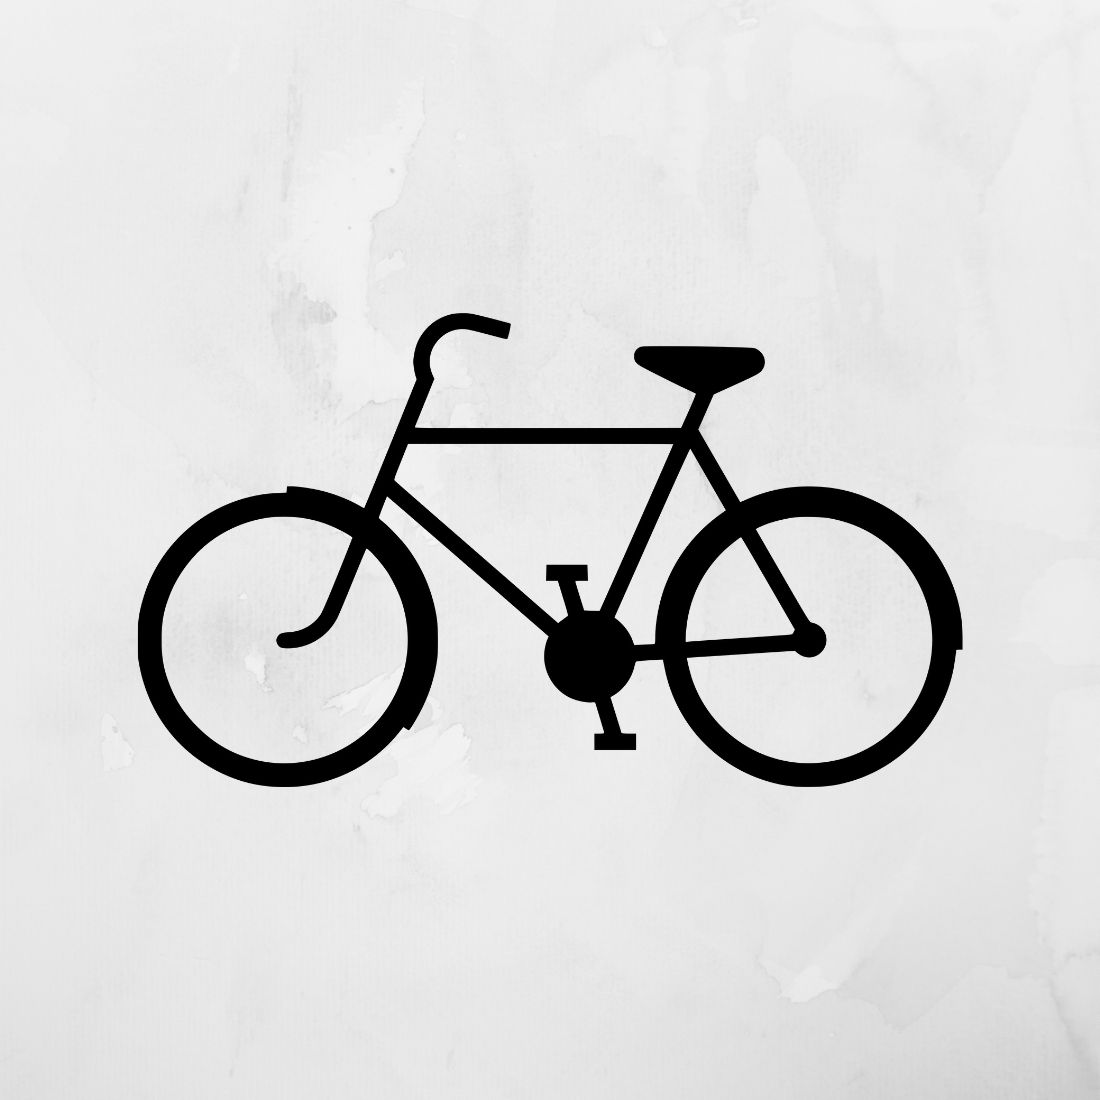 Bicycle SVG variant3.